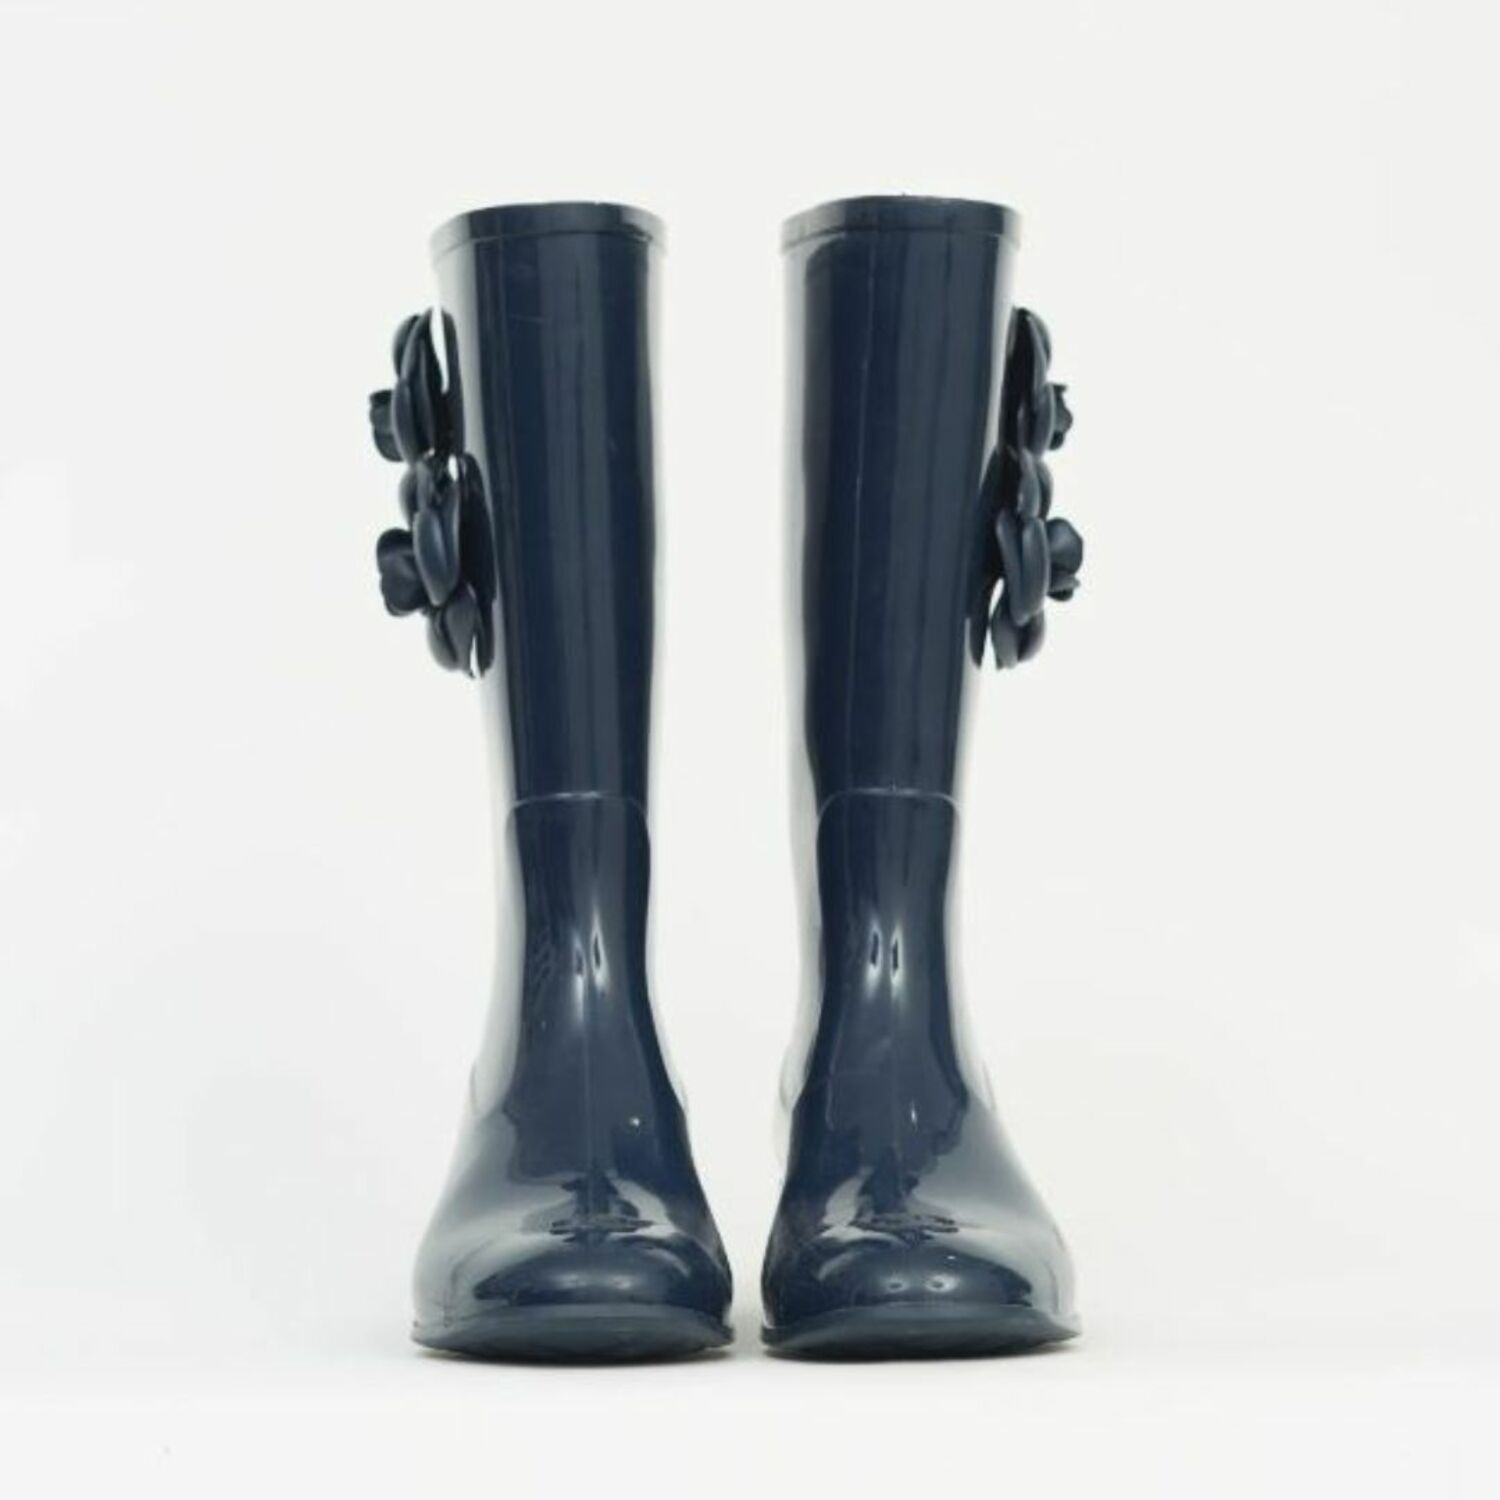 Rubber Rain Boots